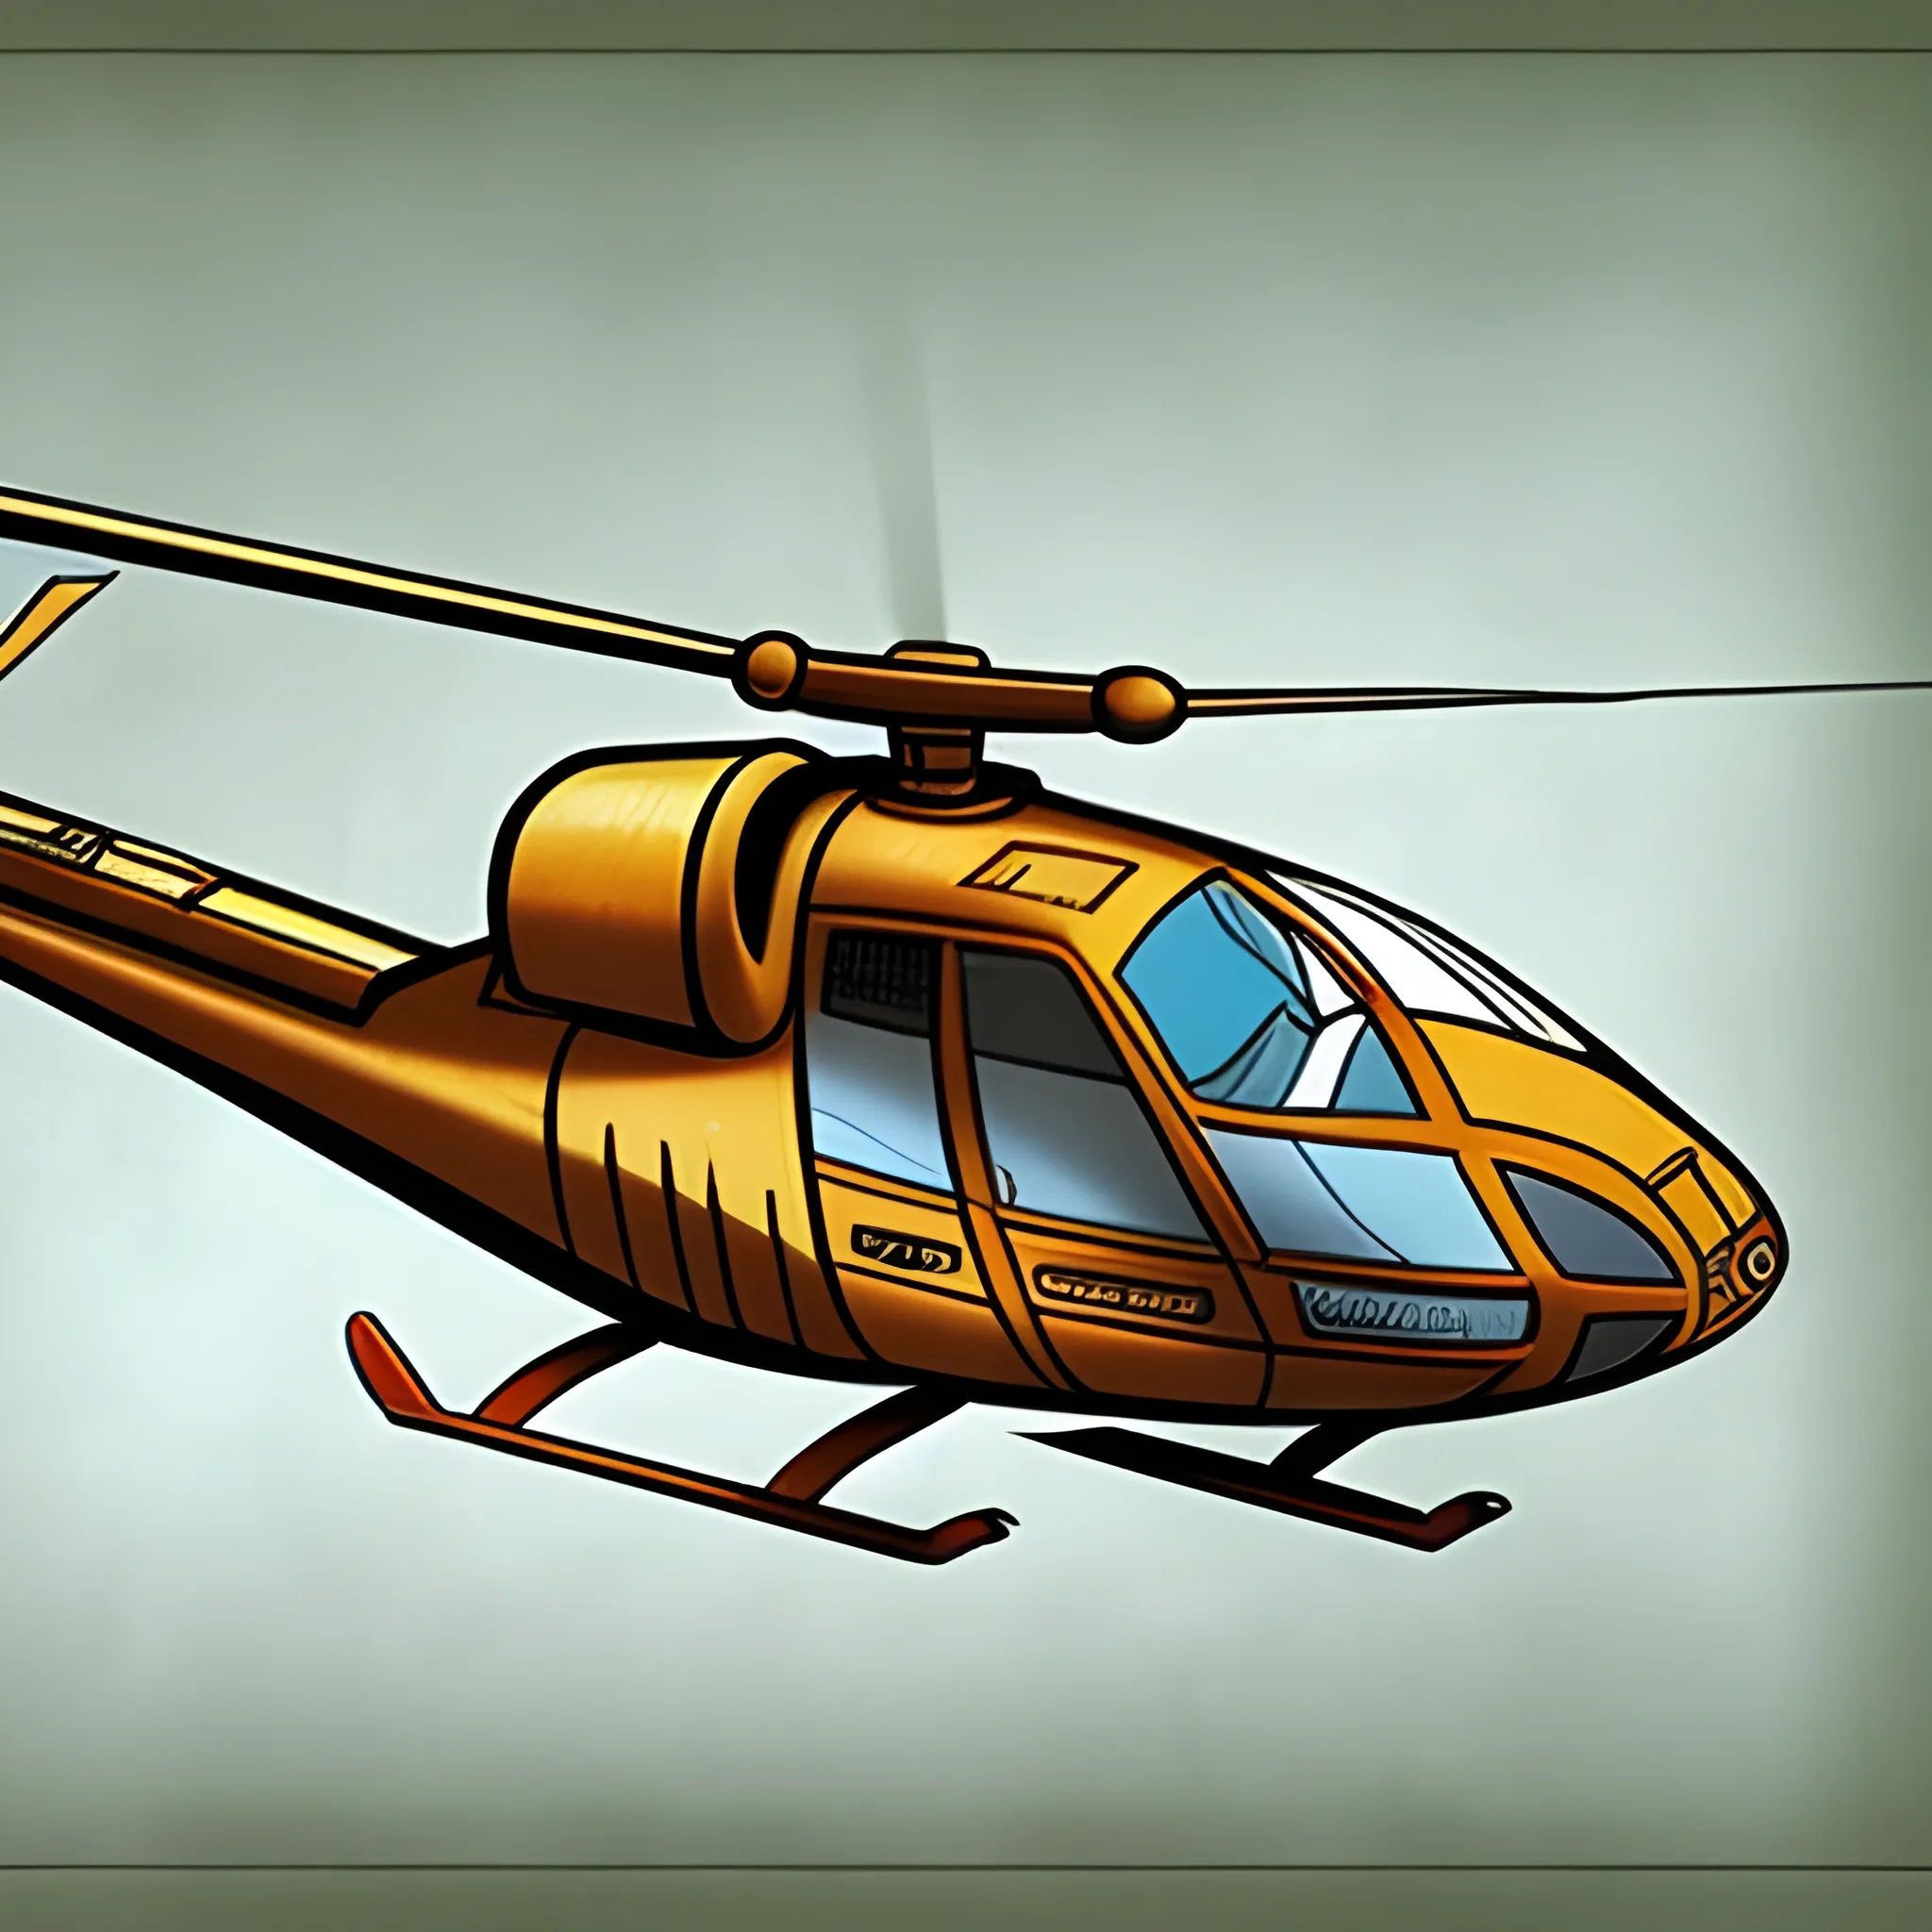 Leonardo da Vinci helicopter design, Cartoon